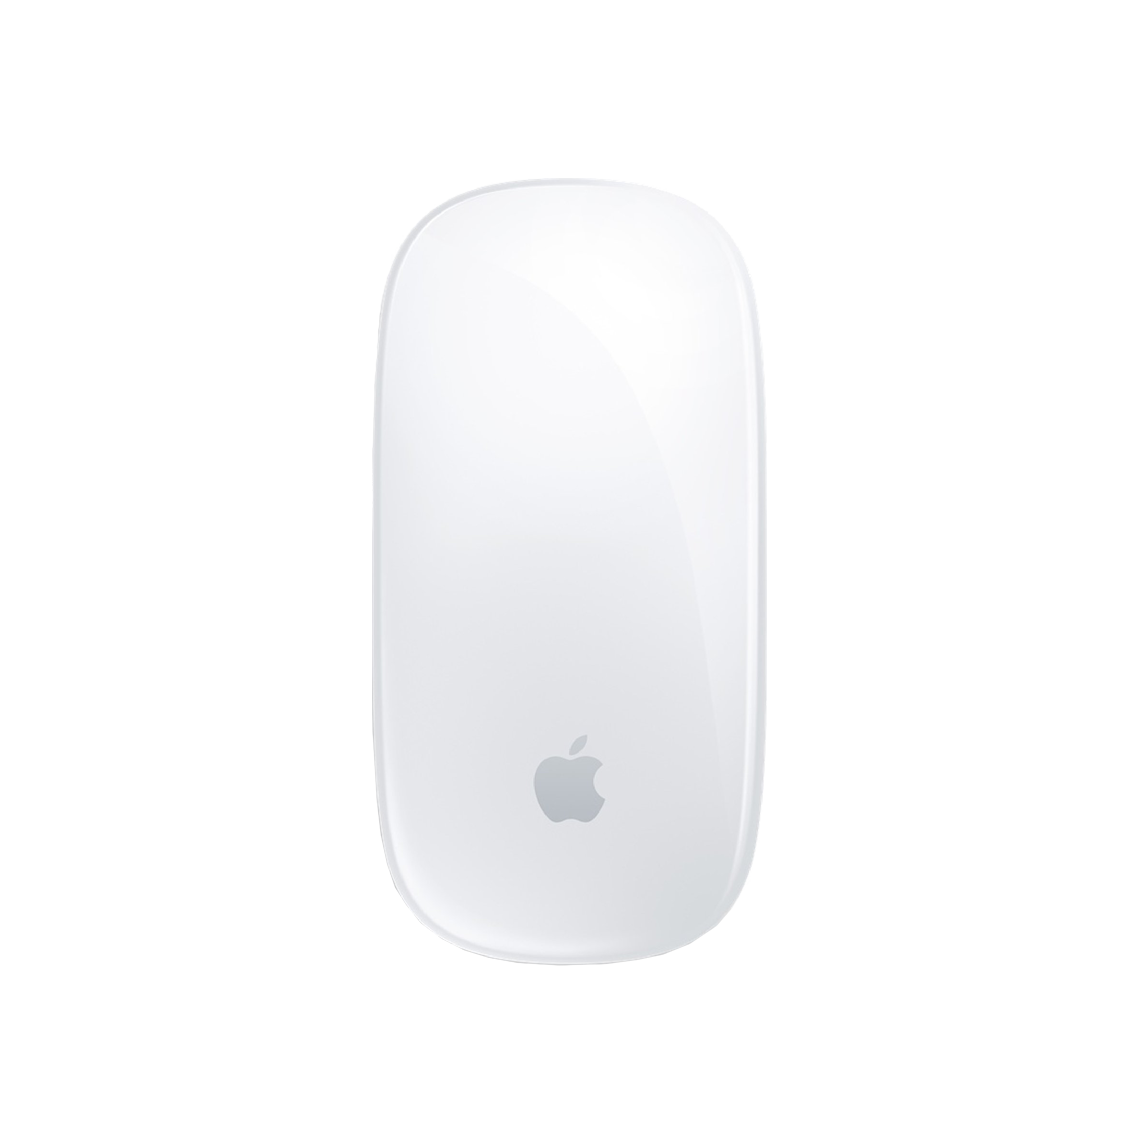 Refurbished Apple Magic Mouse 1